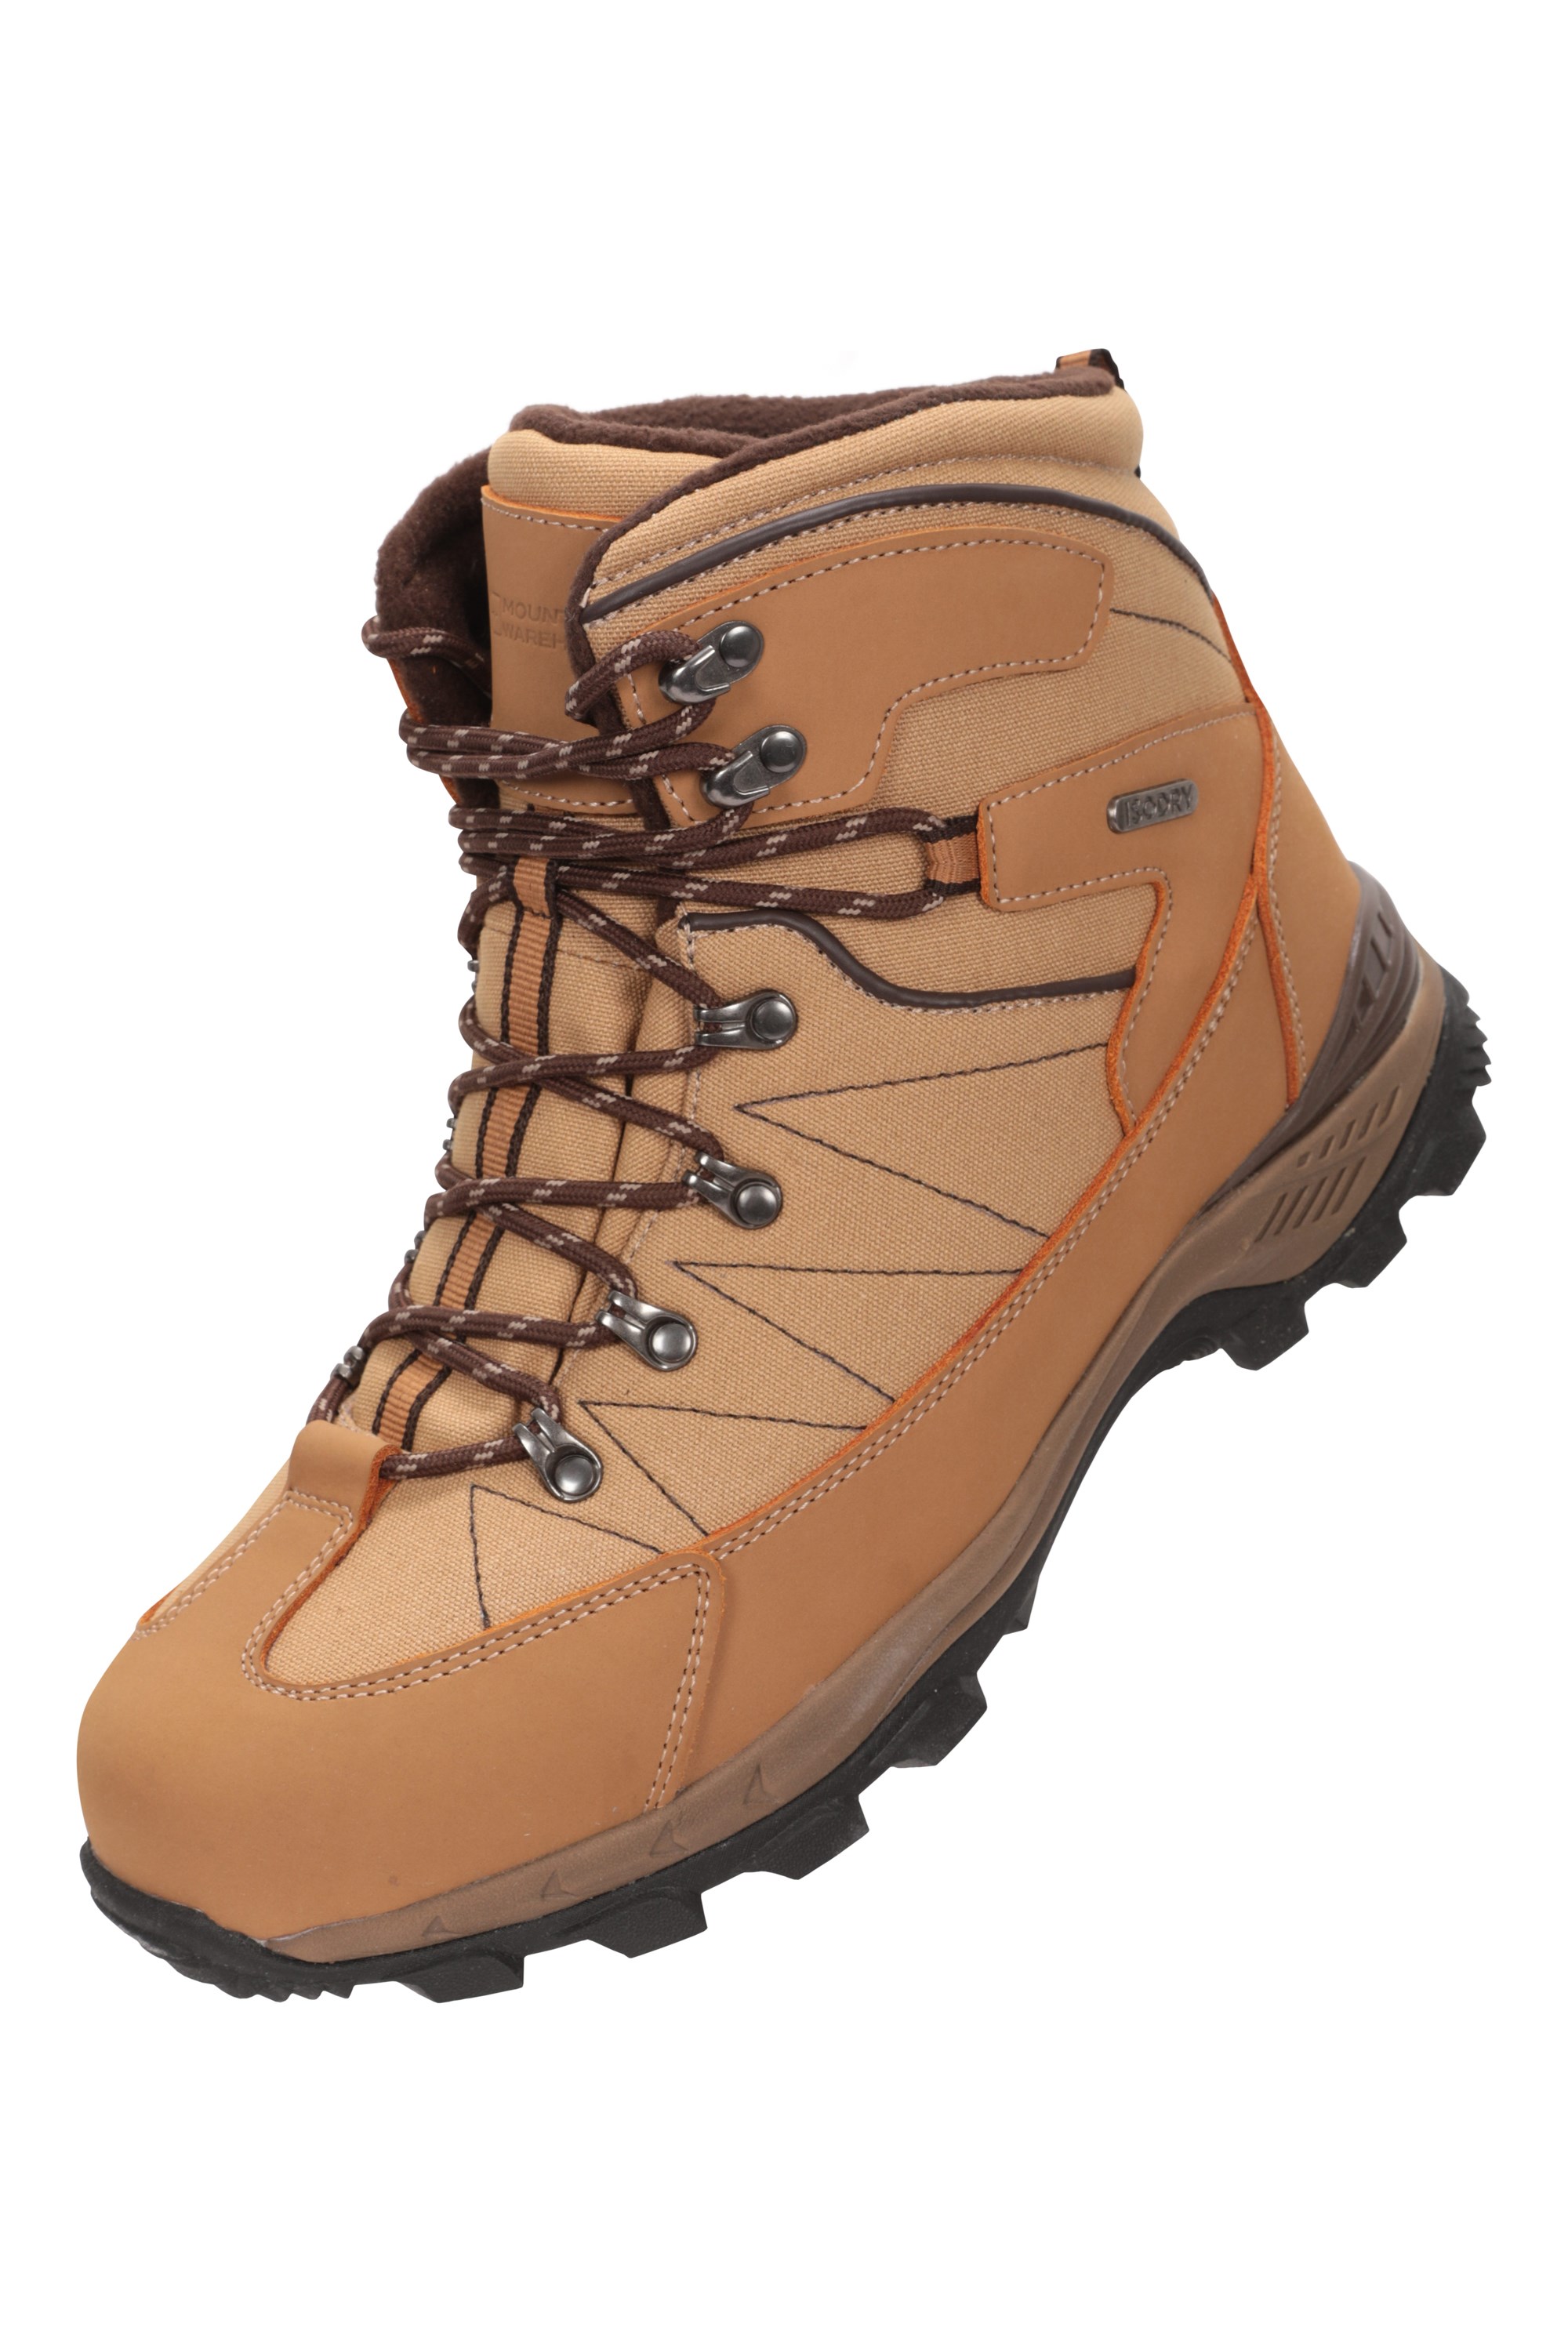 Mountain Warehouse Mens Boulder Winter Trekker Boots Waterproof Thermal Shoes 